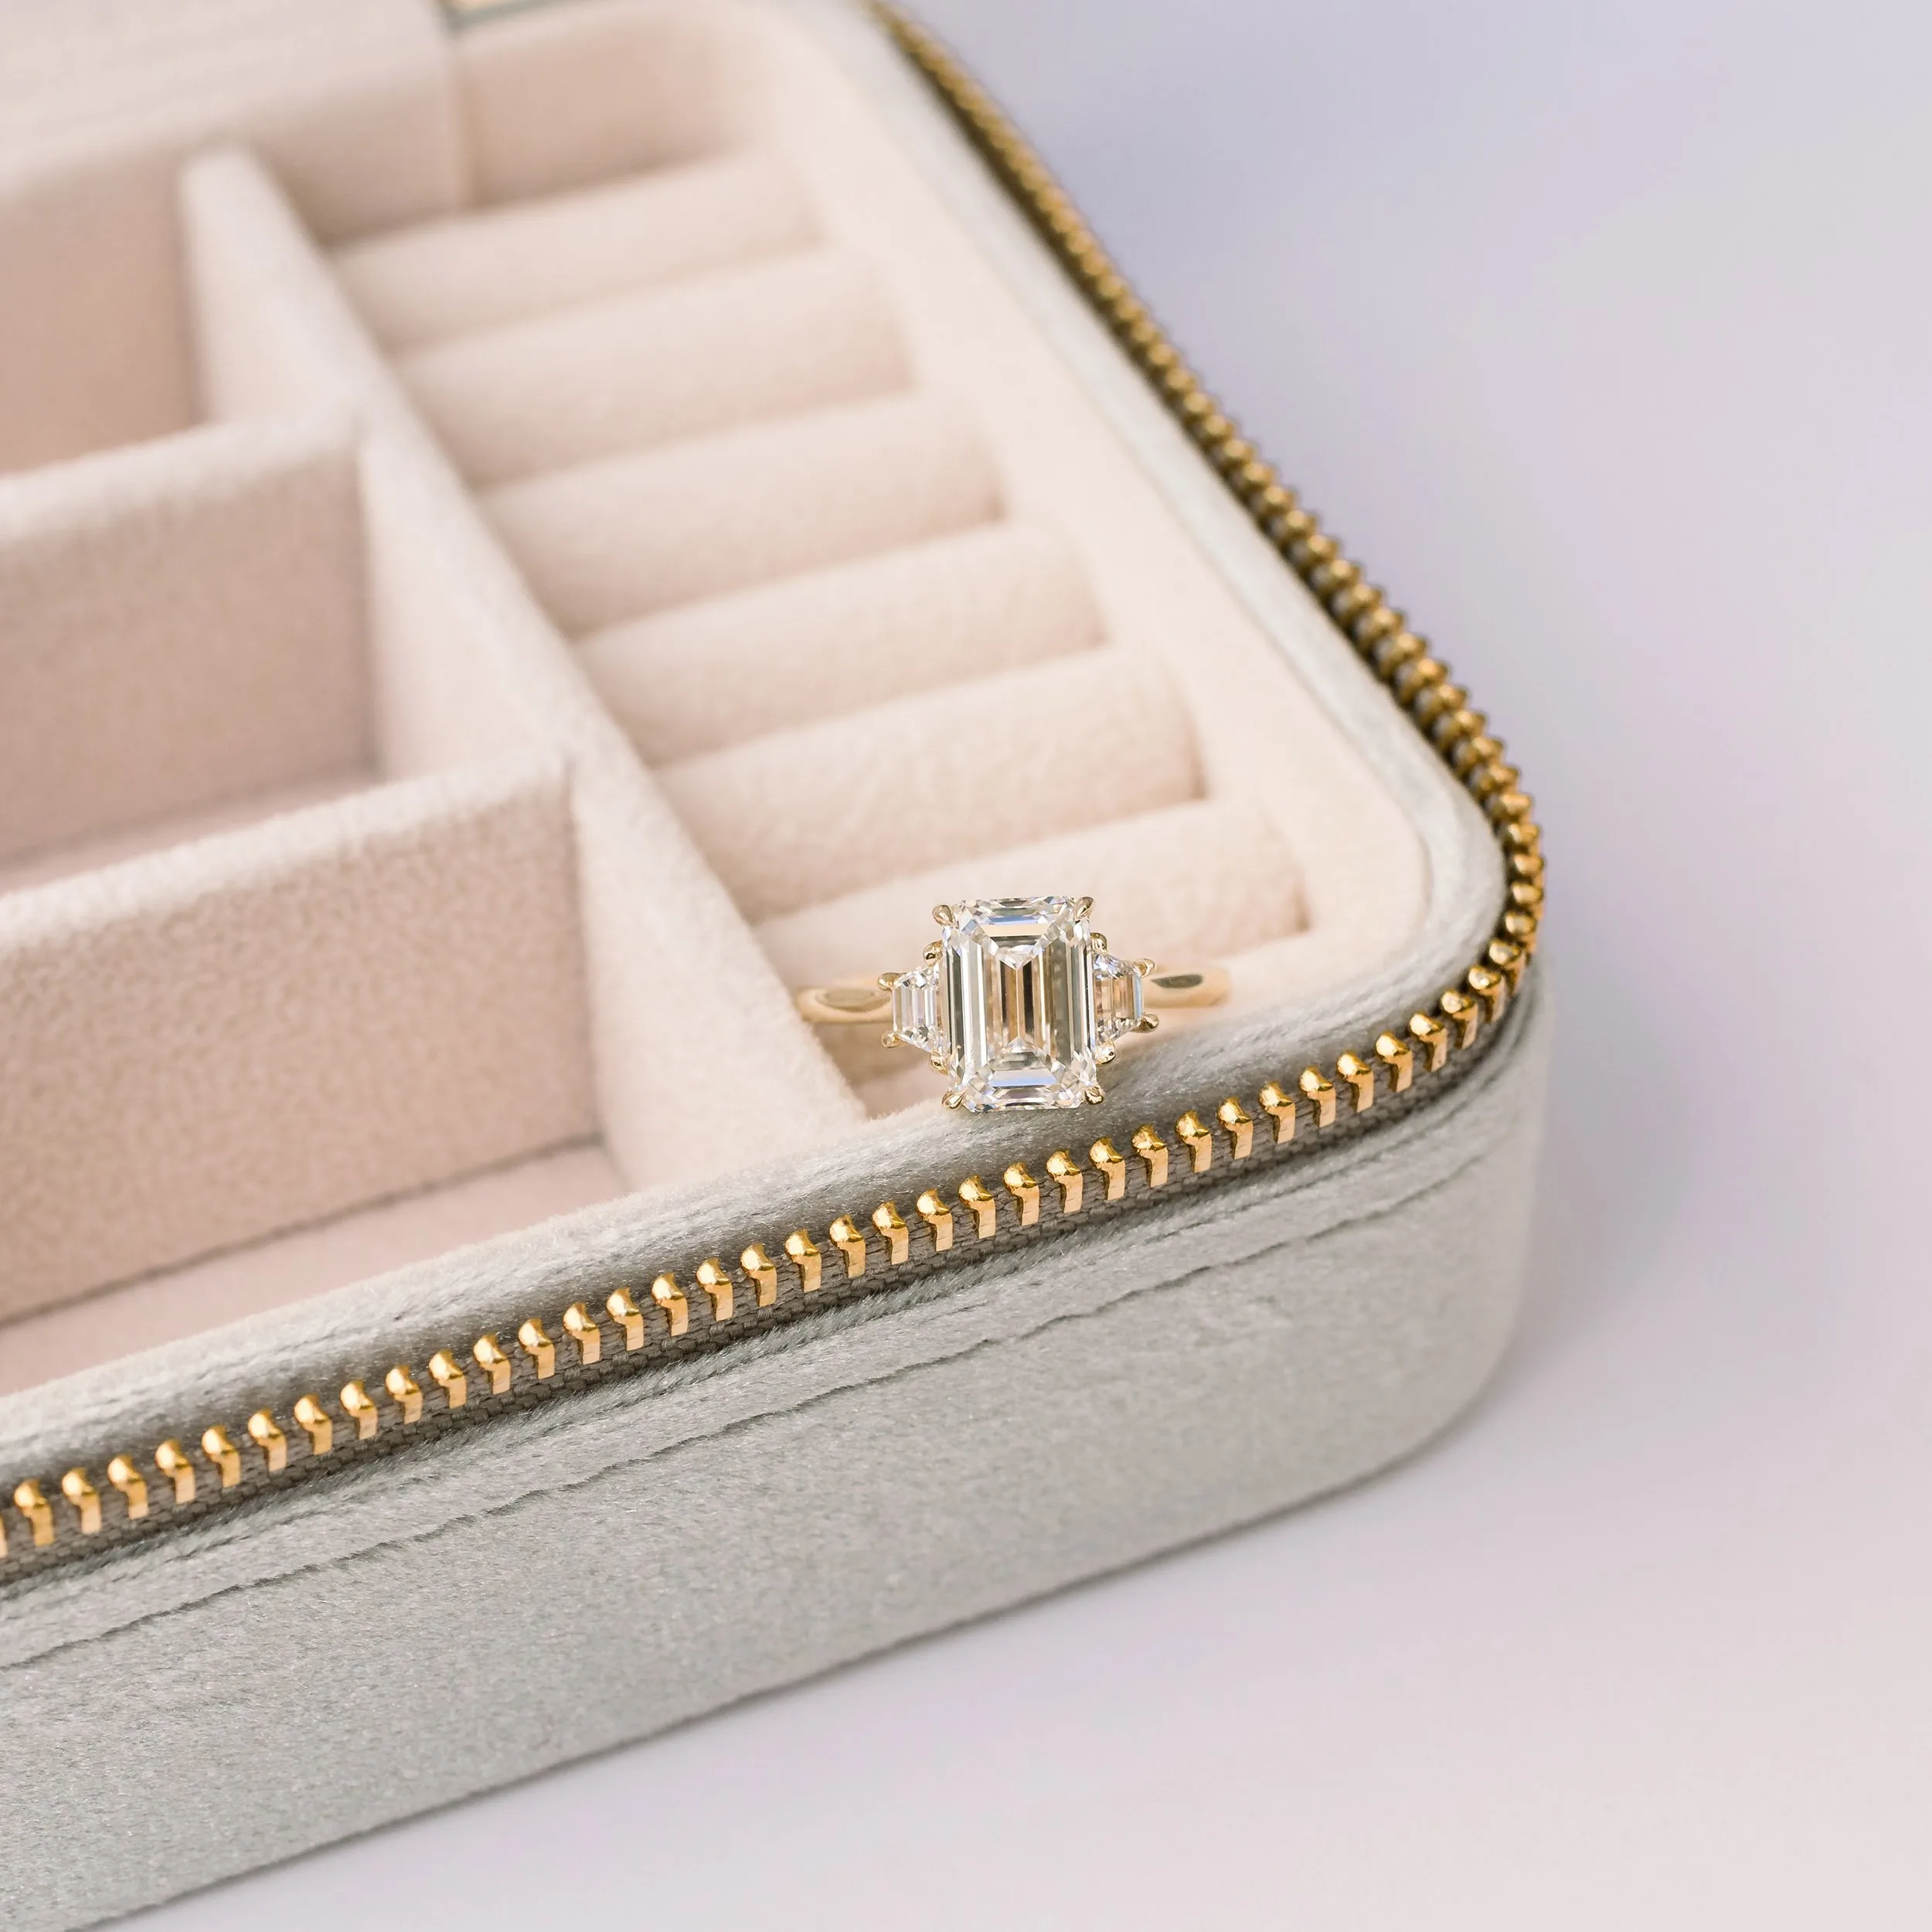 14k yellow gold 3 ct emerald cut lab diamond engagement ring with trapezoid side stones ada diamonds design ad 465 macro